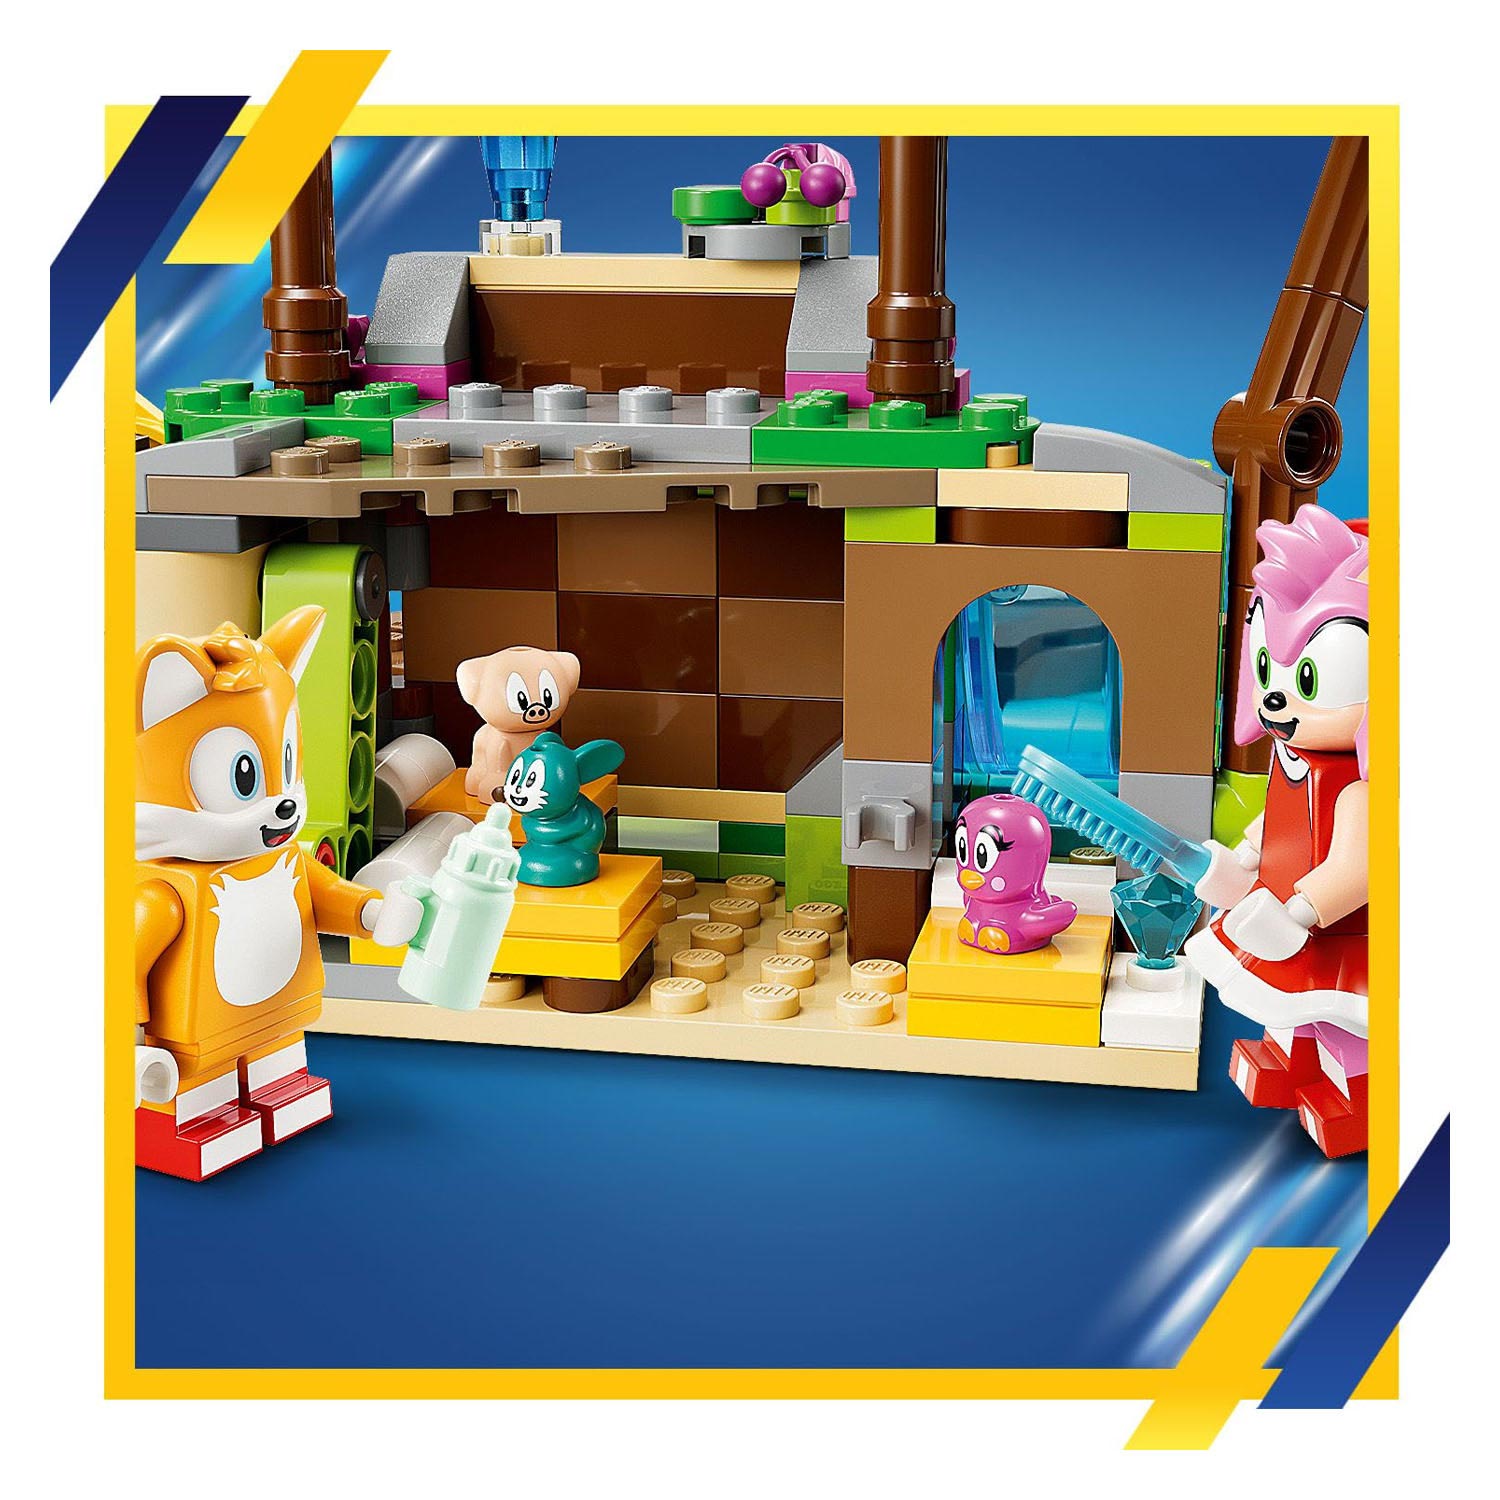 LEGO Sonic 76992 Amy's Dierenopvangeiland